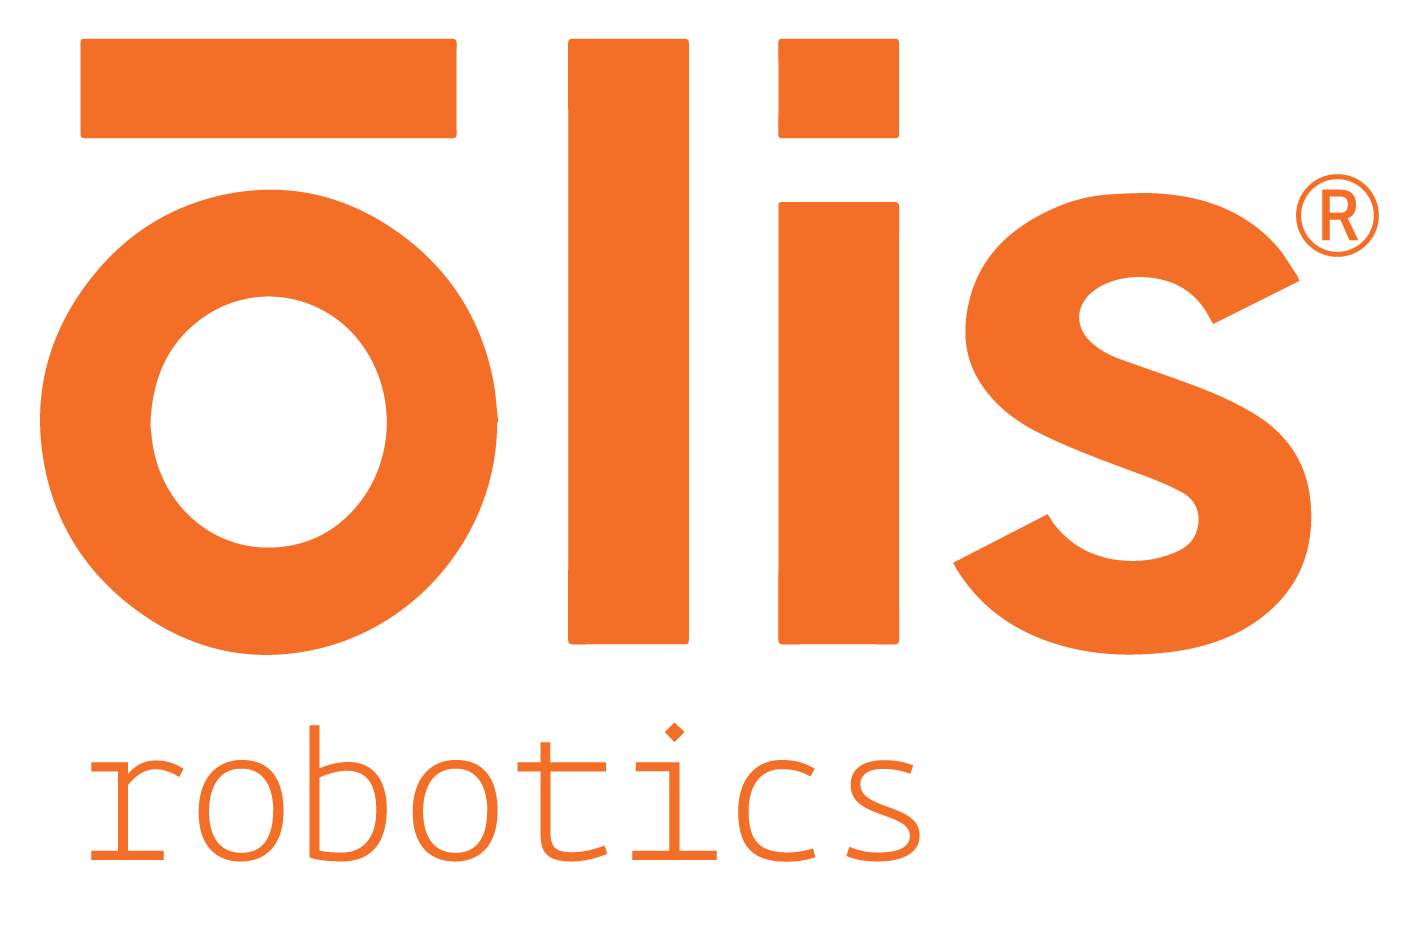 Olis Robotics